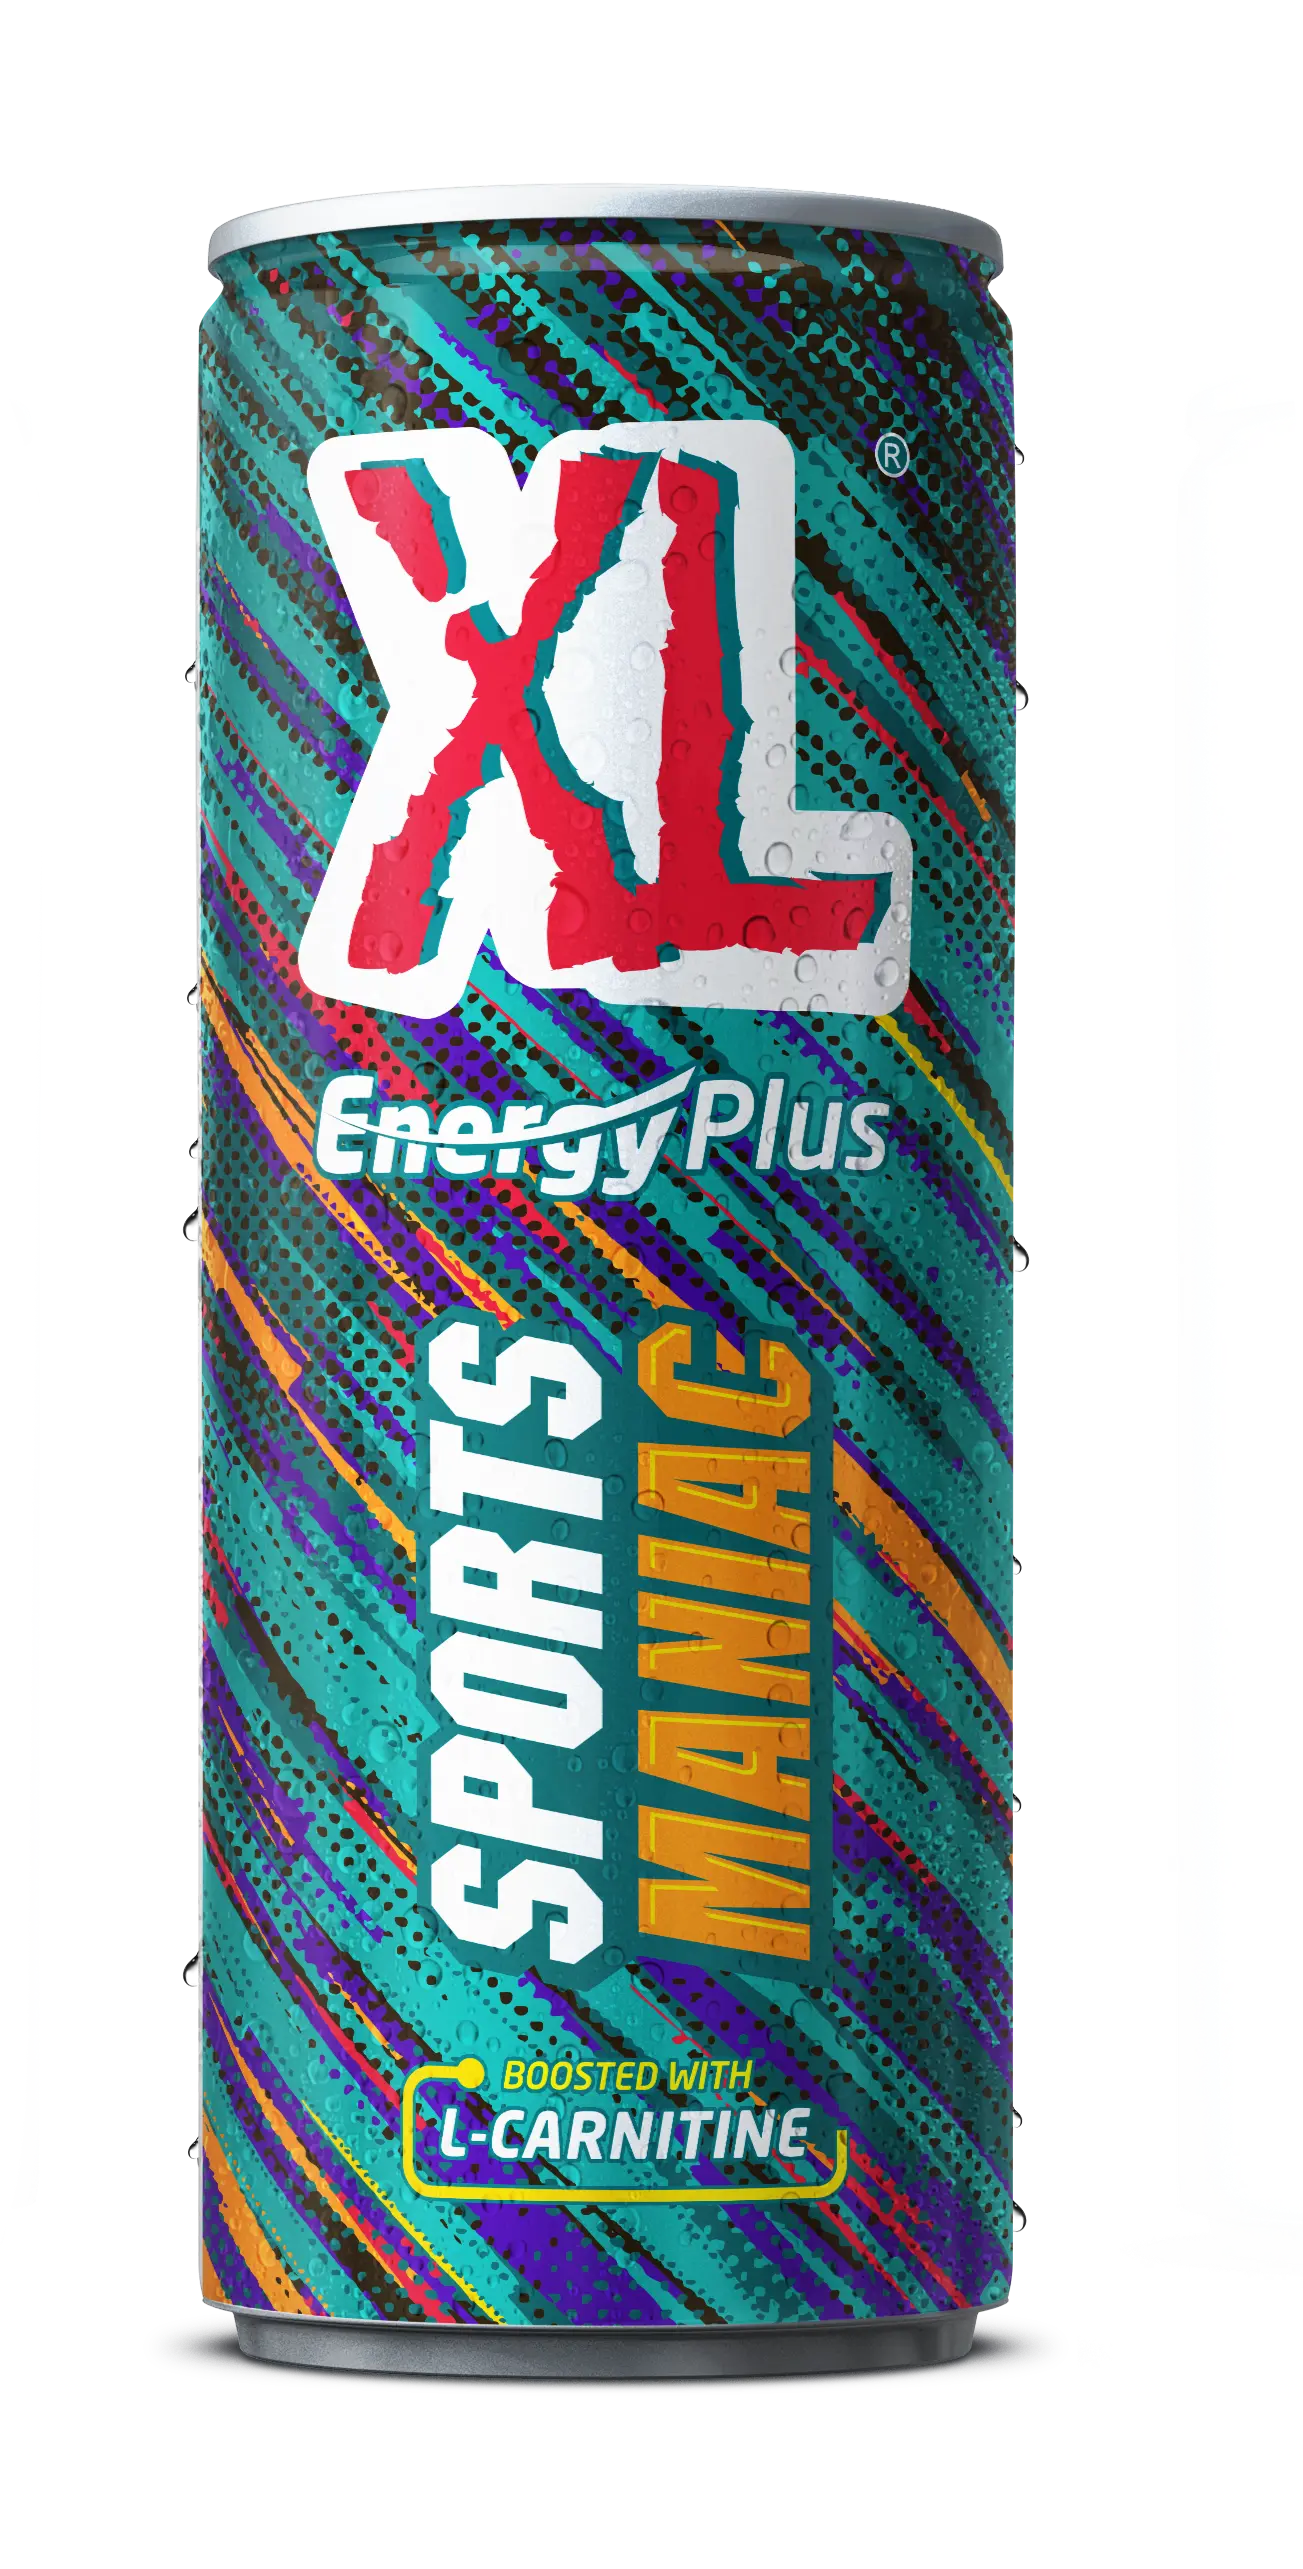 XL Energy Plus Sport Maniac 250ml